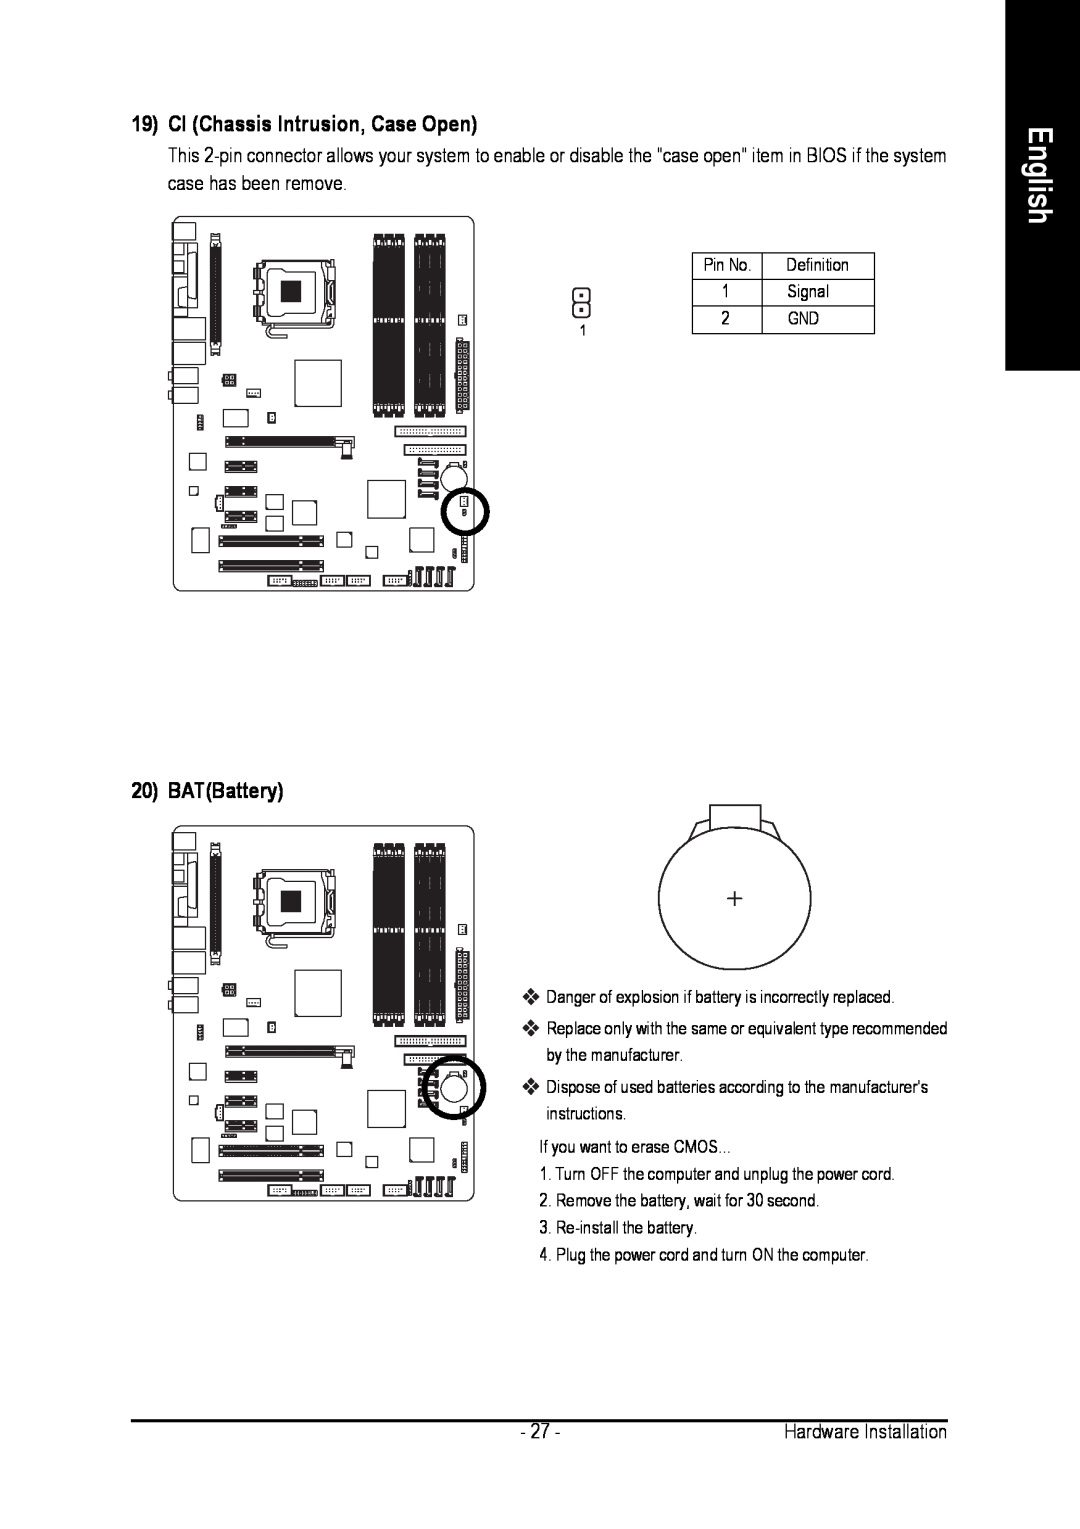 Gigabyte GA-8AENXP-D user manual CI Chassis Intrusion, Case Open, BATBattery, English 